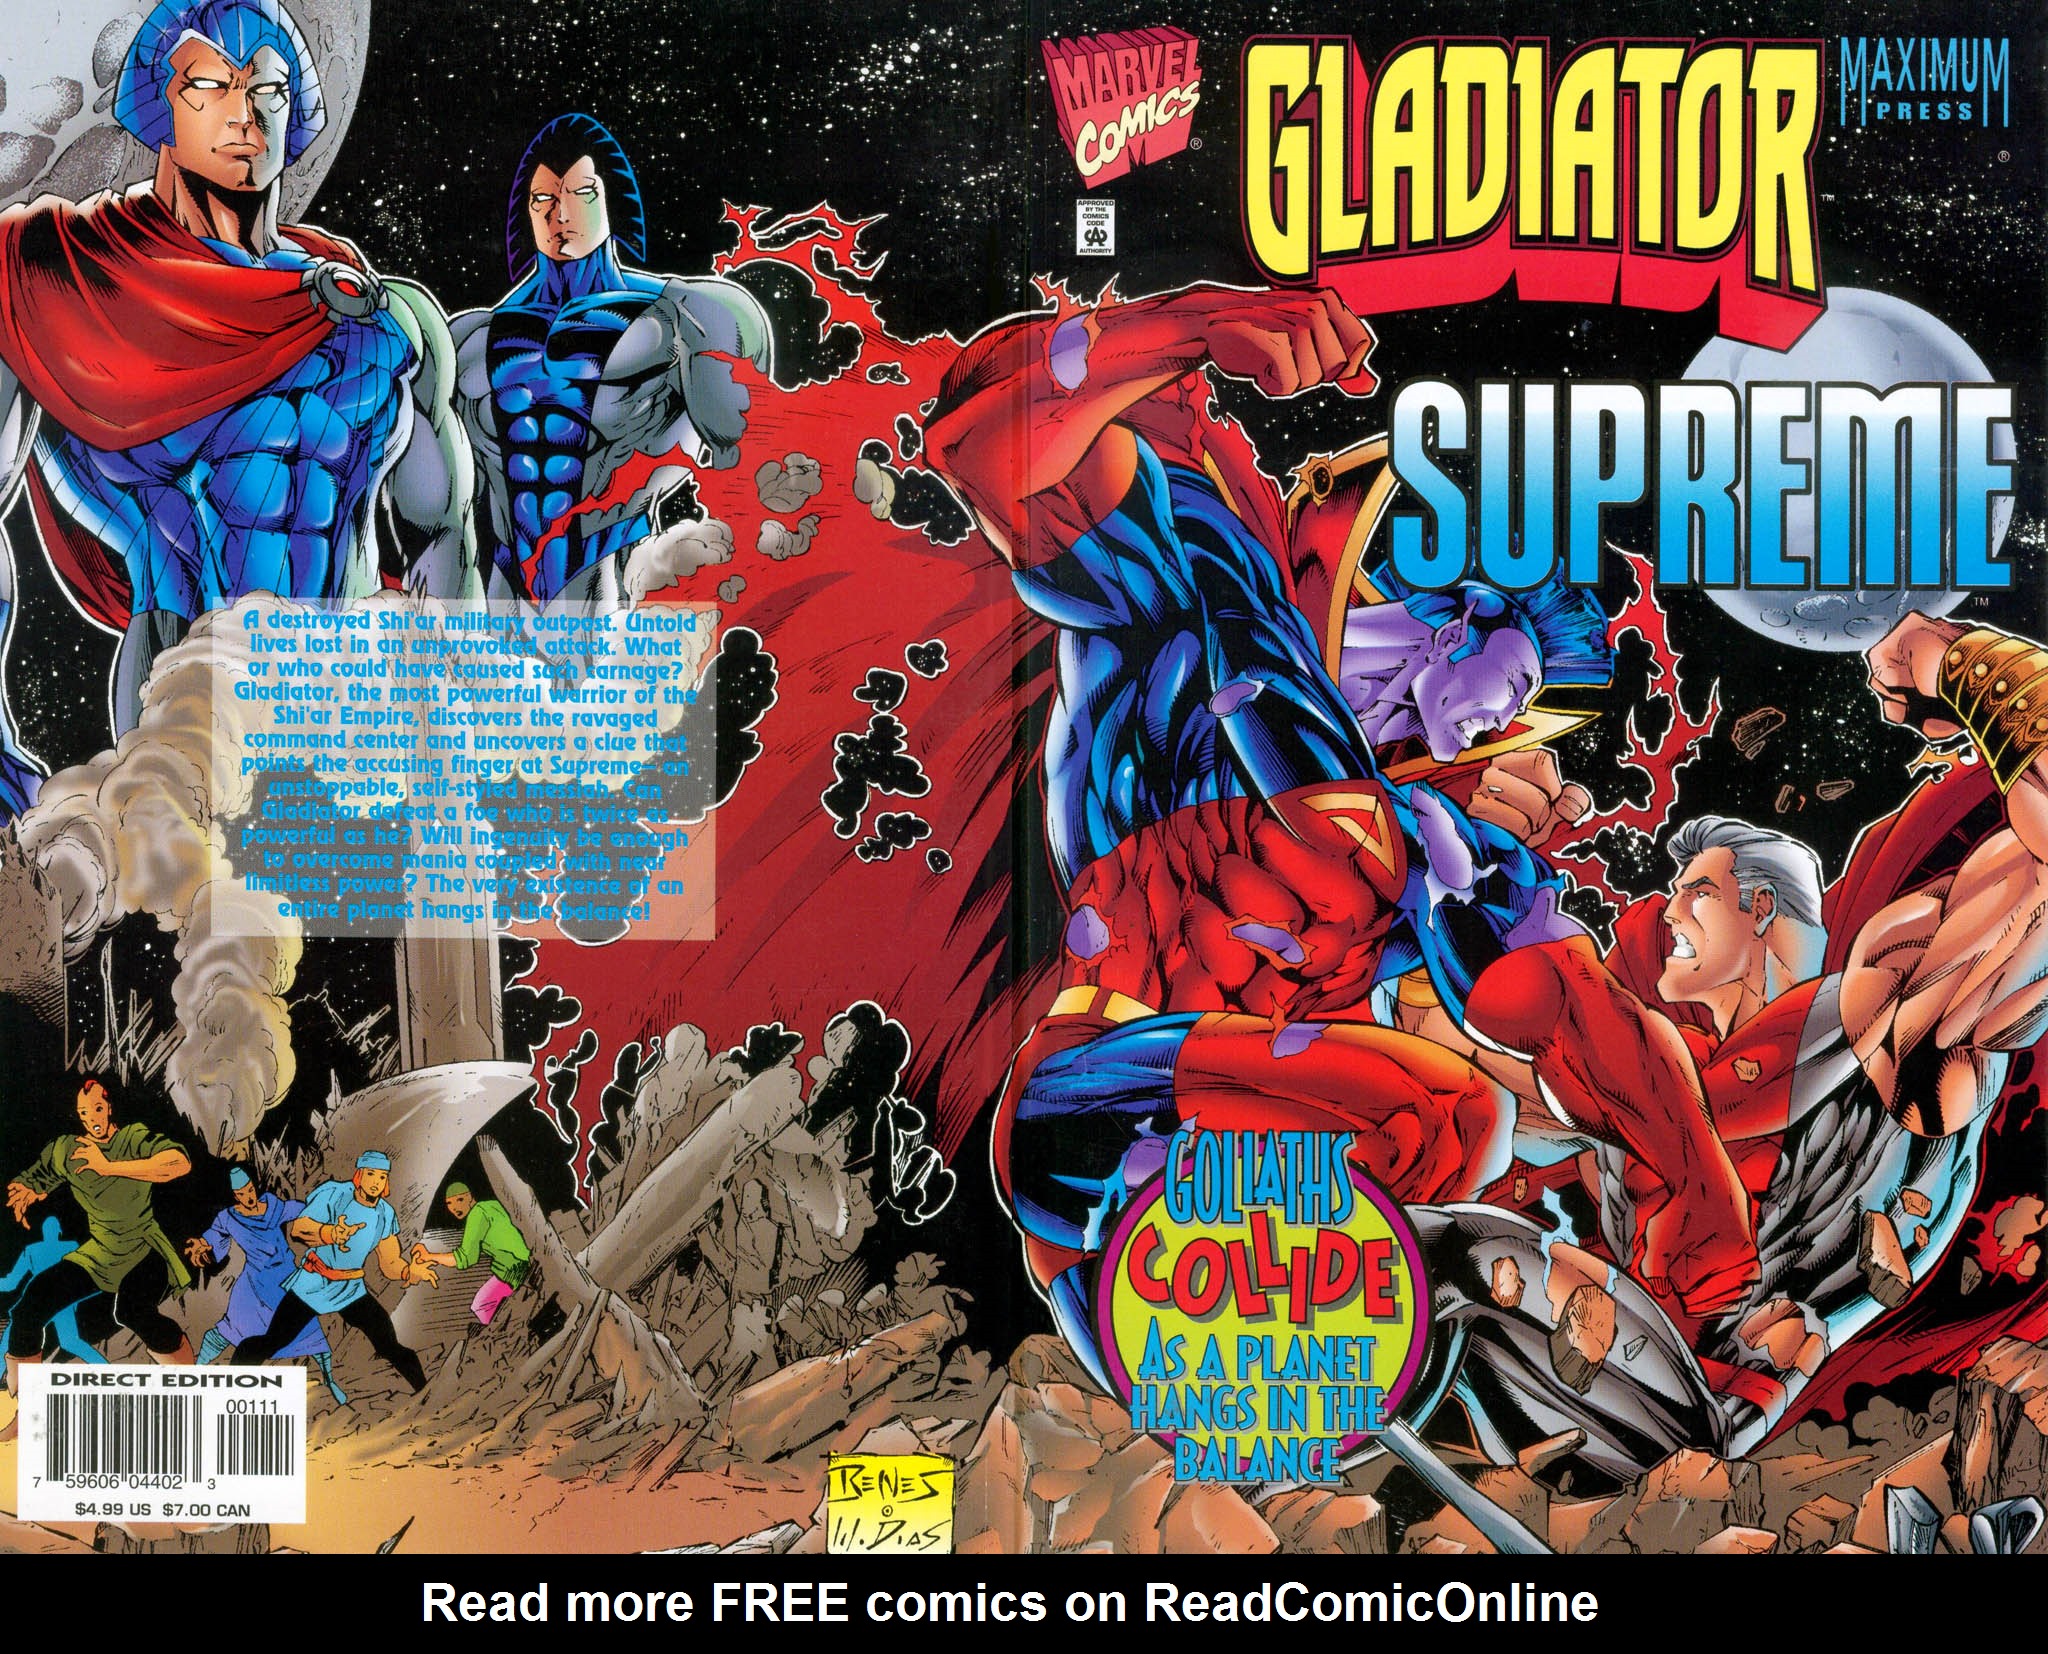 Gladiator Supreme Full | Read Gladiator Supreme Full comic online in high  quality. Read Full Comic online for free - Read comics online in high  quality .| READ COMIC ONLINE